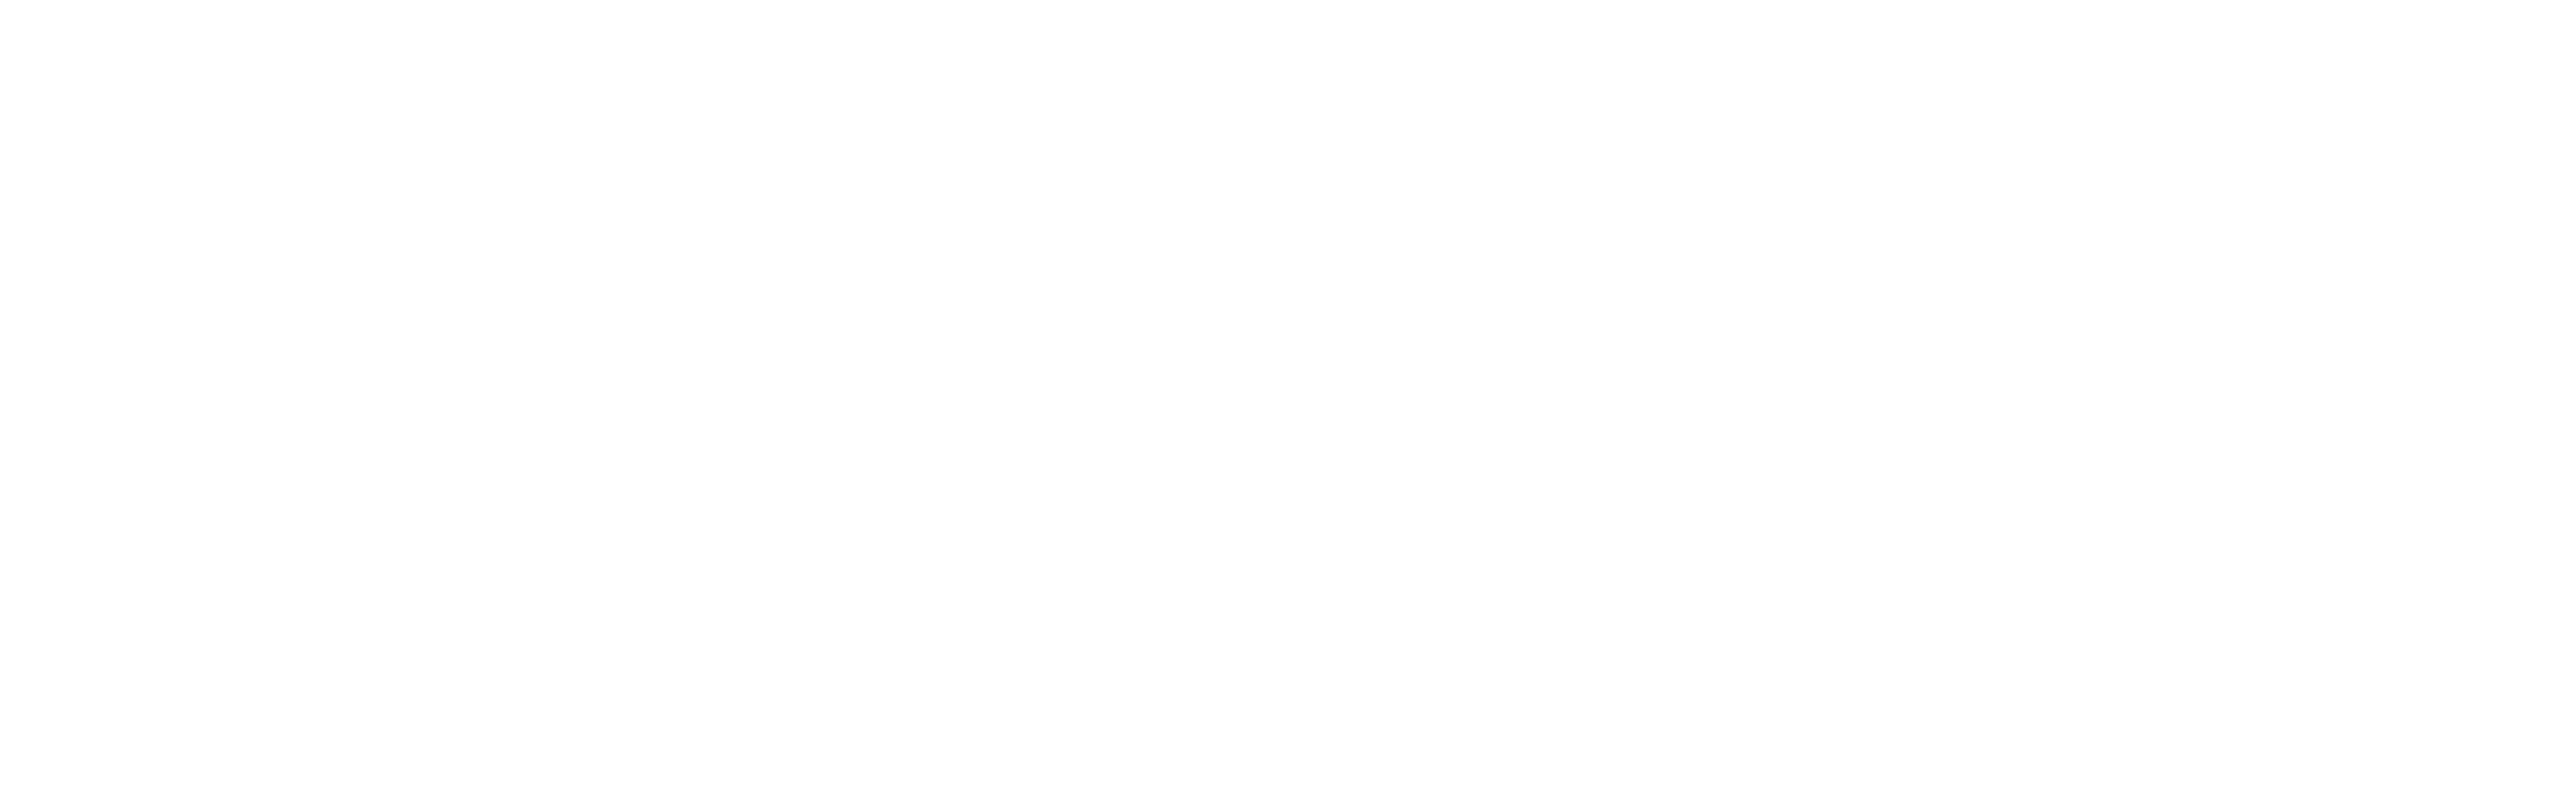 Adam Hamilton Doubt - Banner text 1